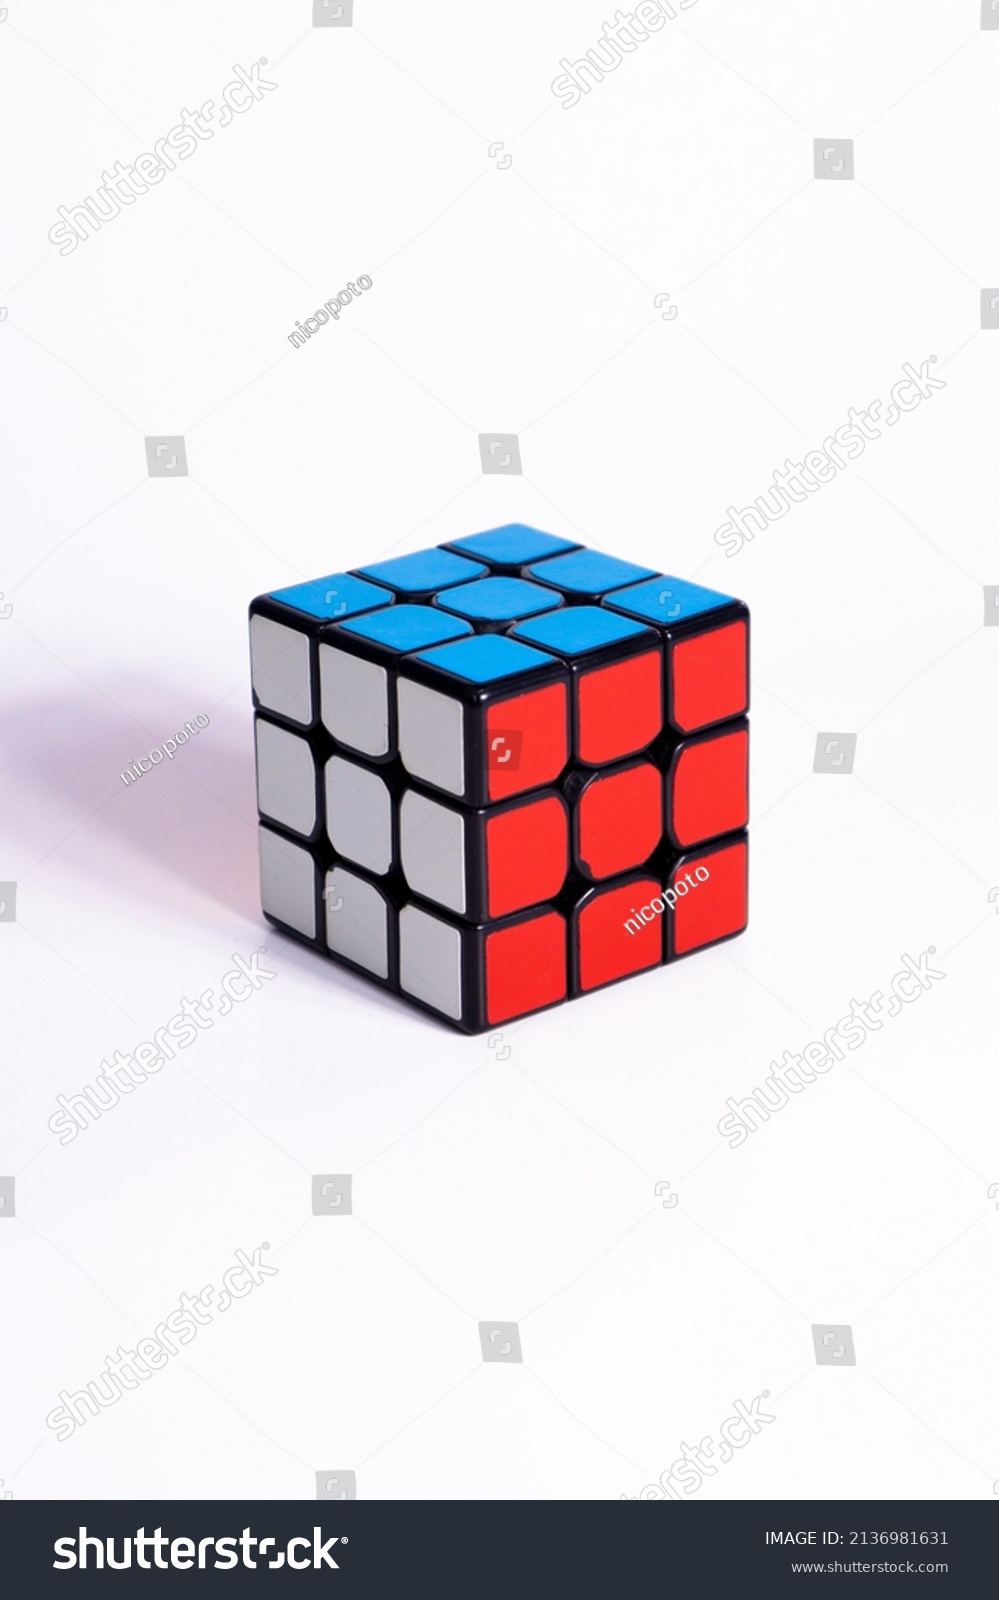 rubik cube 3x3 not solving #2136981631